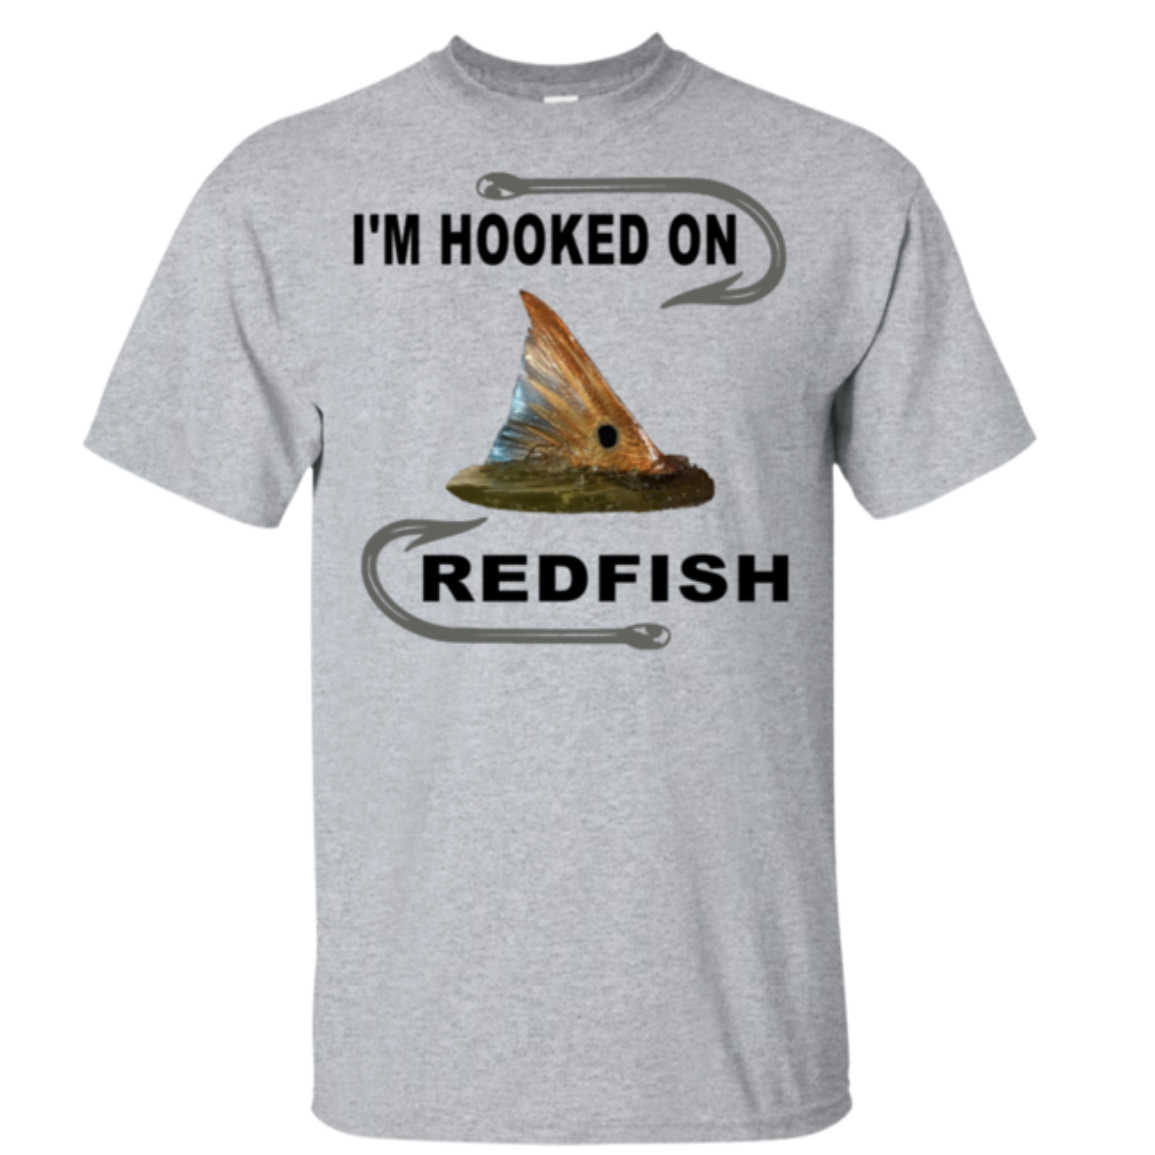 I'm hooked on redfish t-shirt sport grey